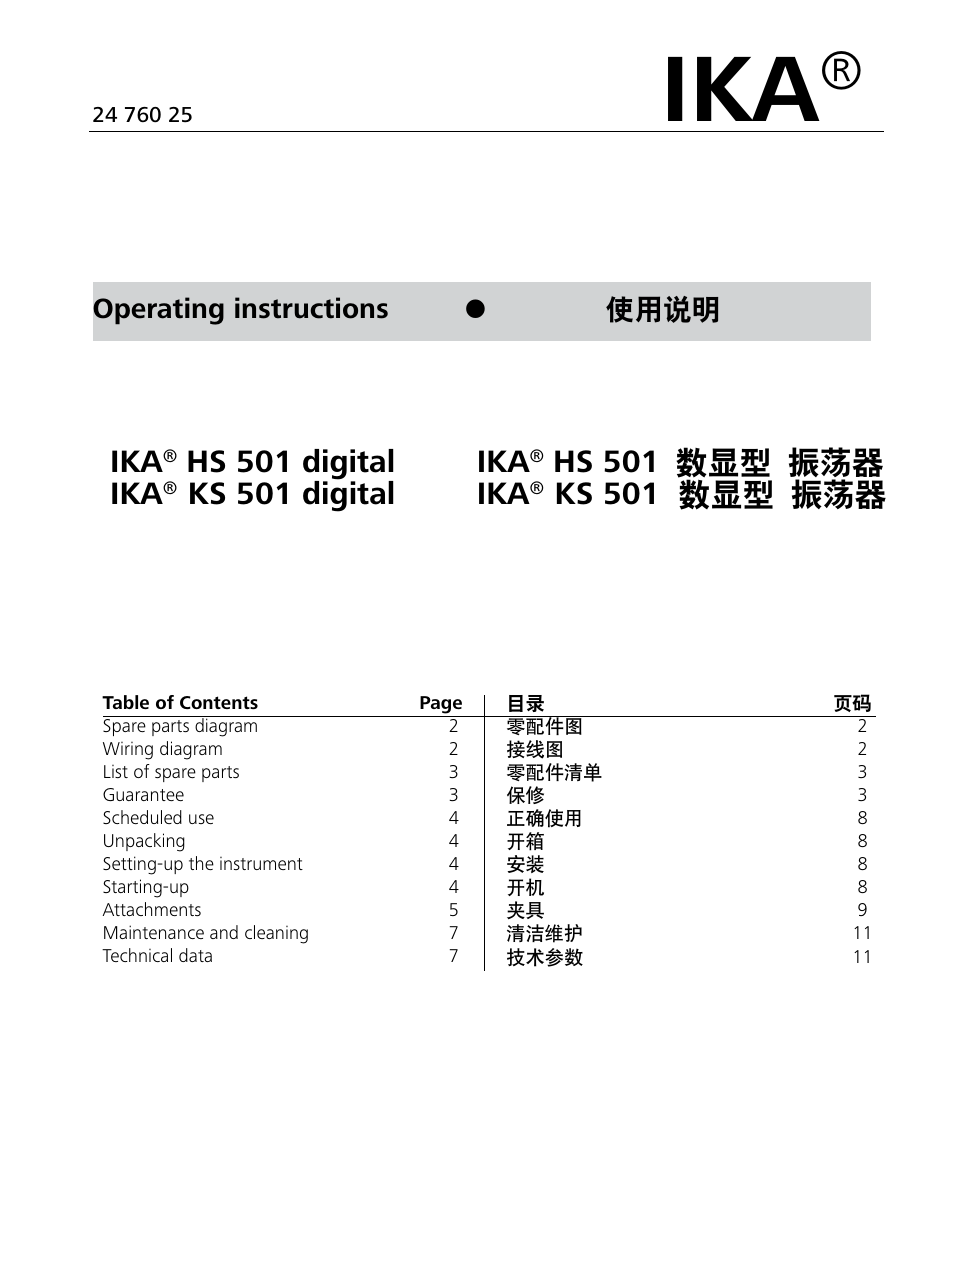 IKA KS 501 digital User Manual | 12 pages